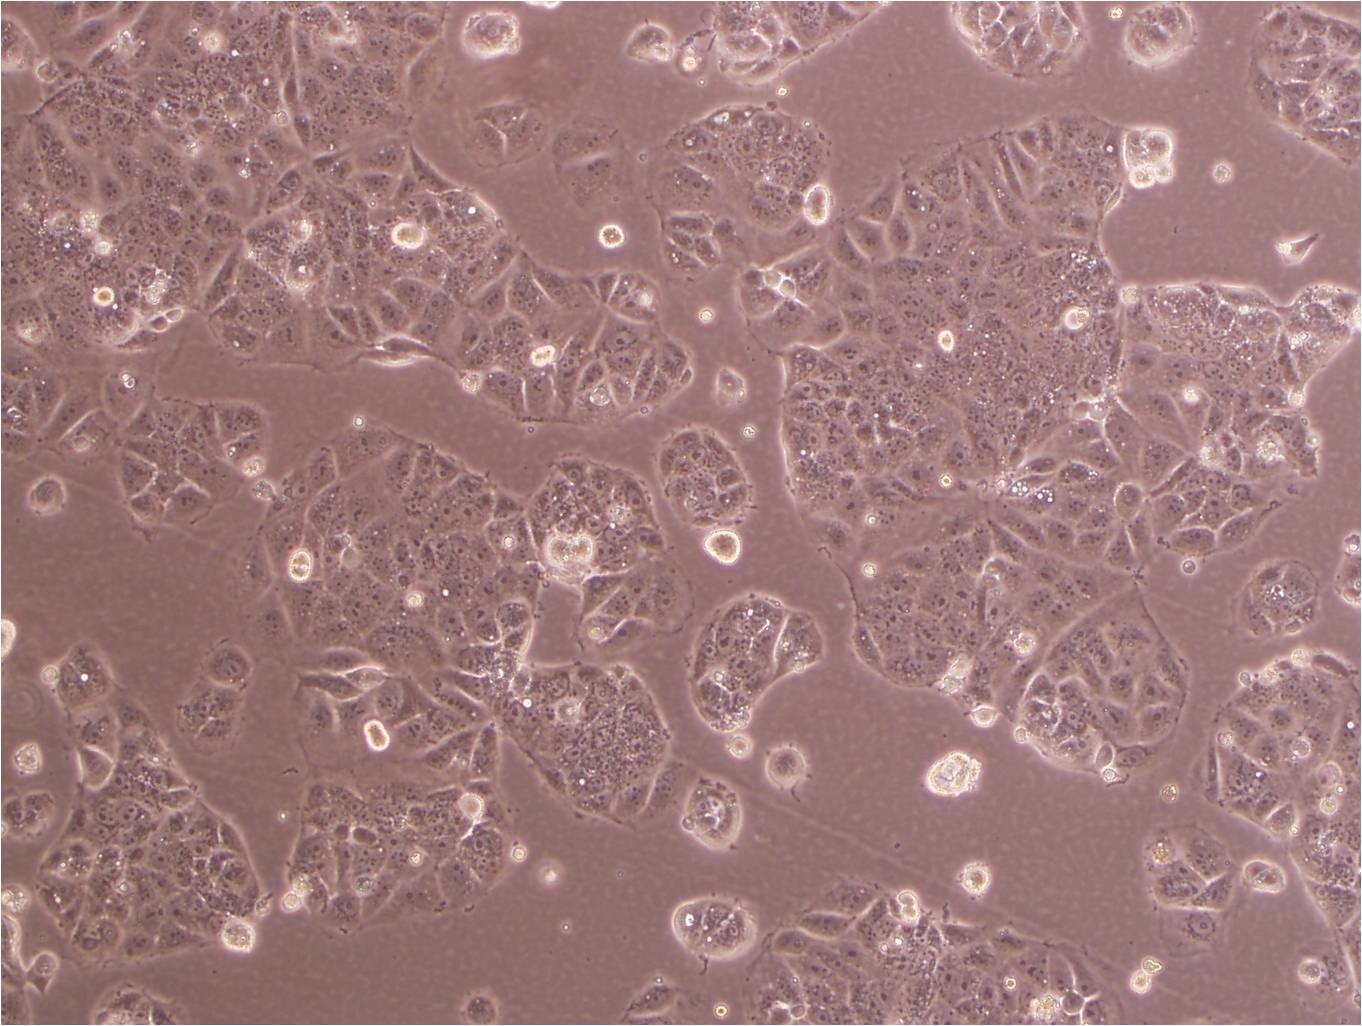 Fu97 Cell|人胃癌细胞